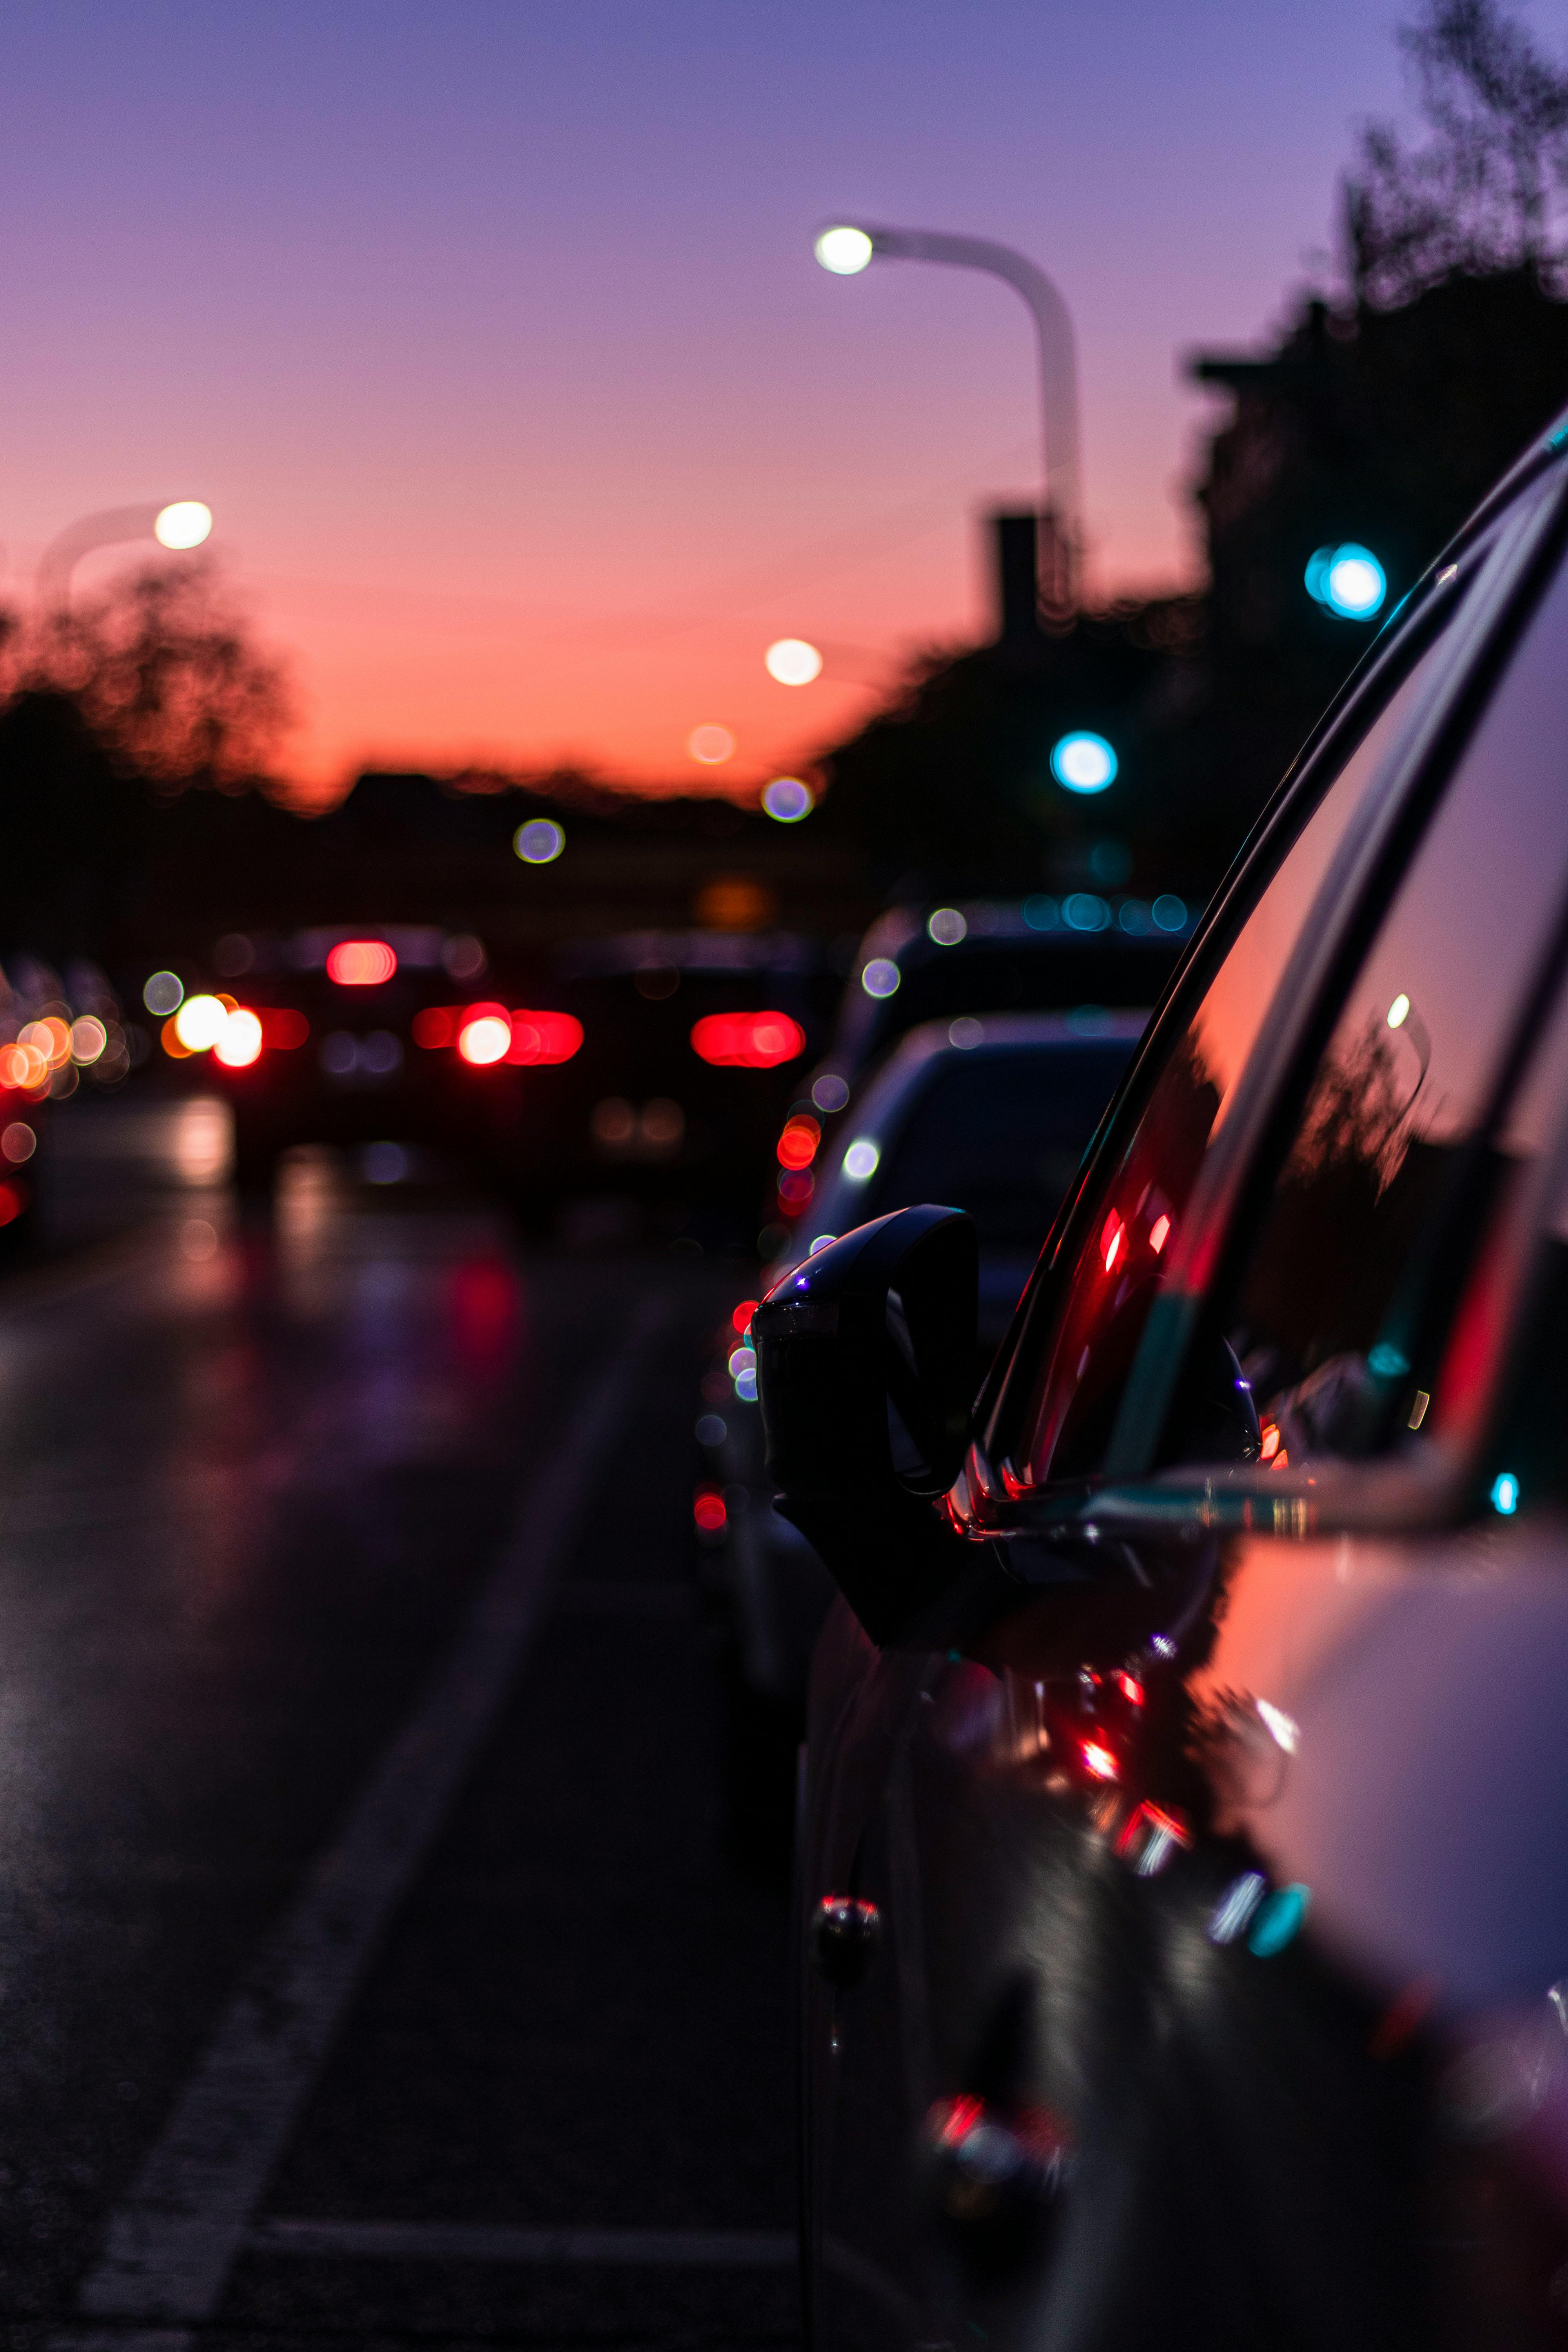 Driving around at night | Source: Pexels